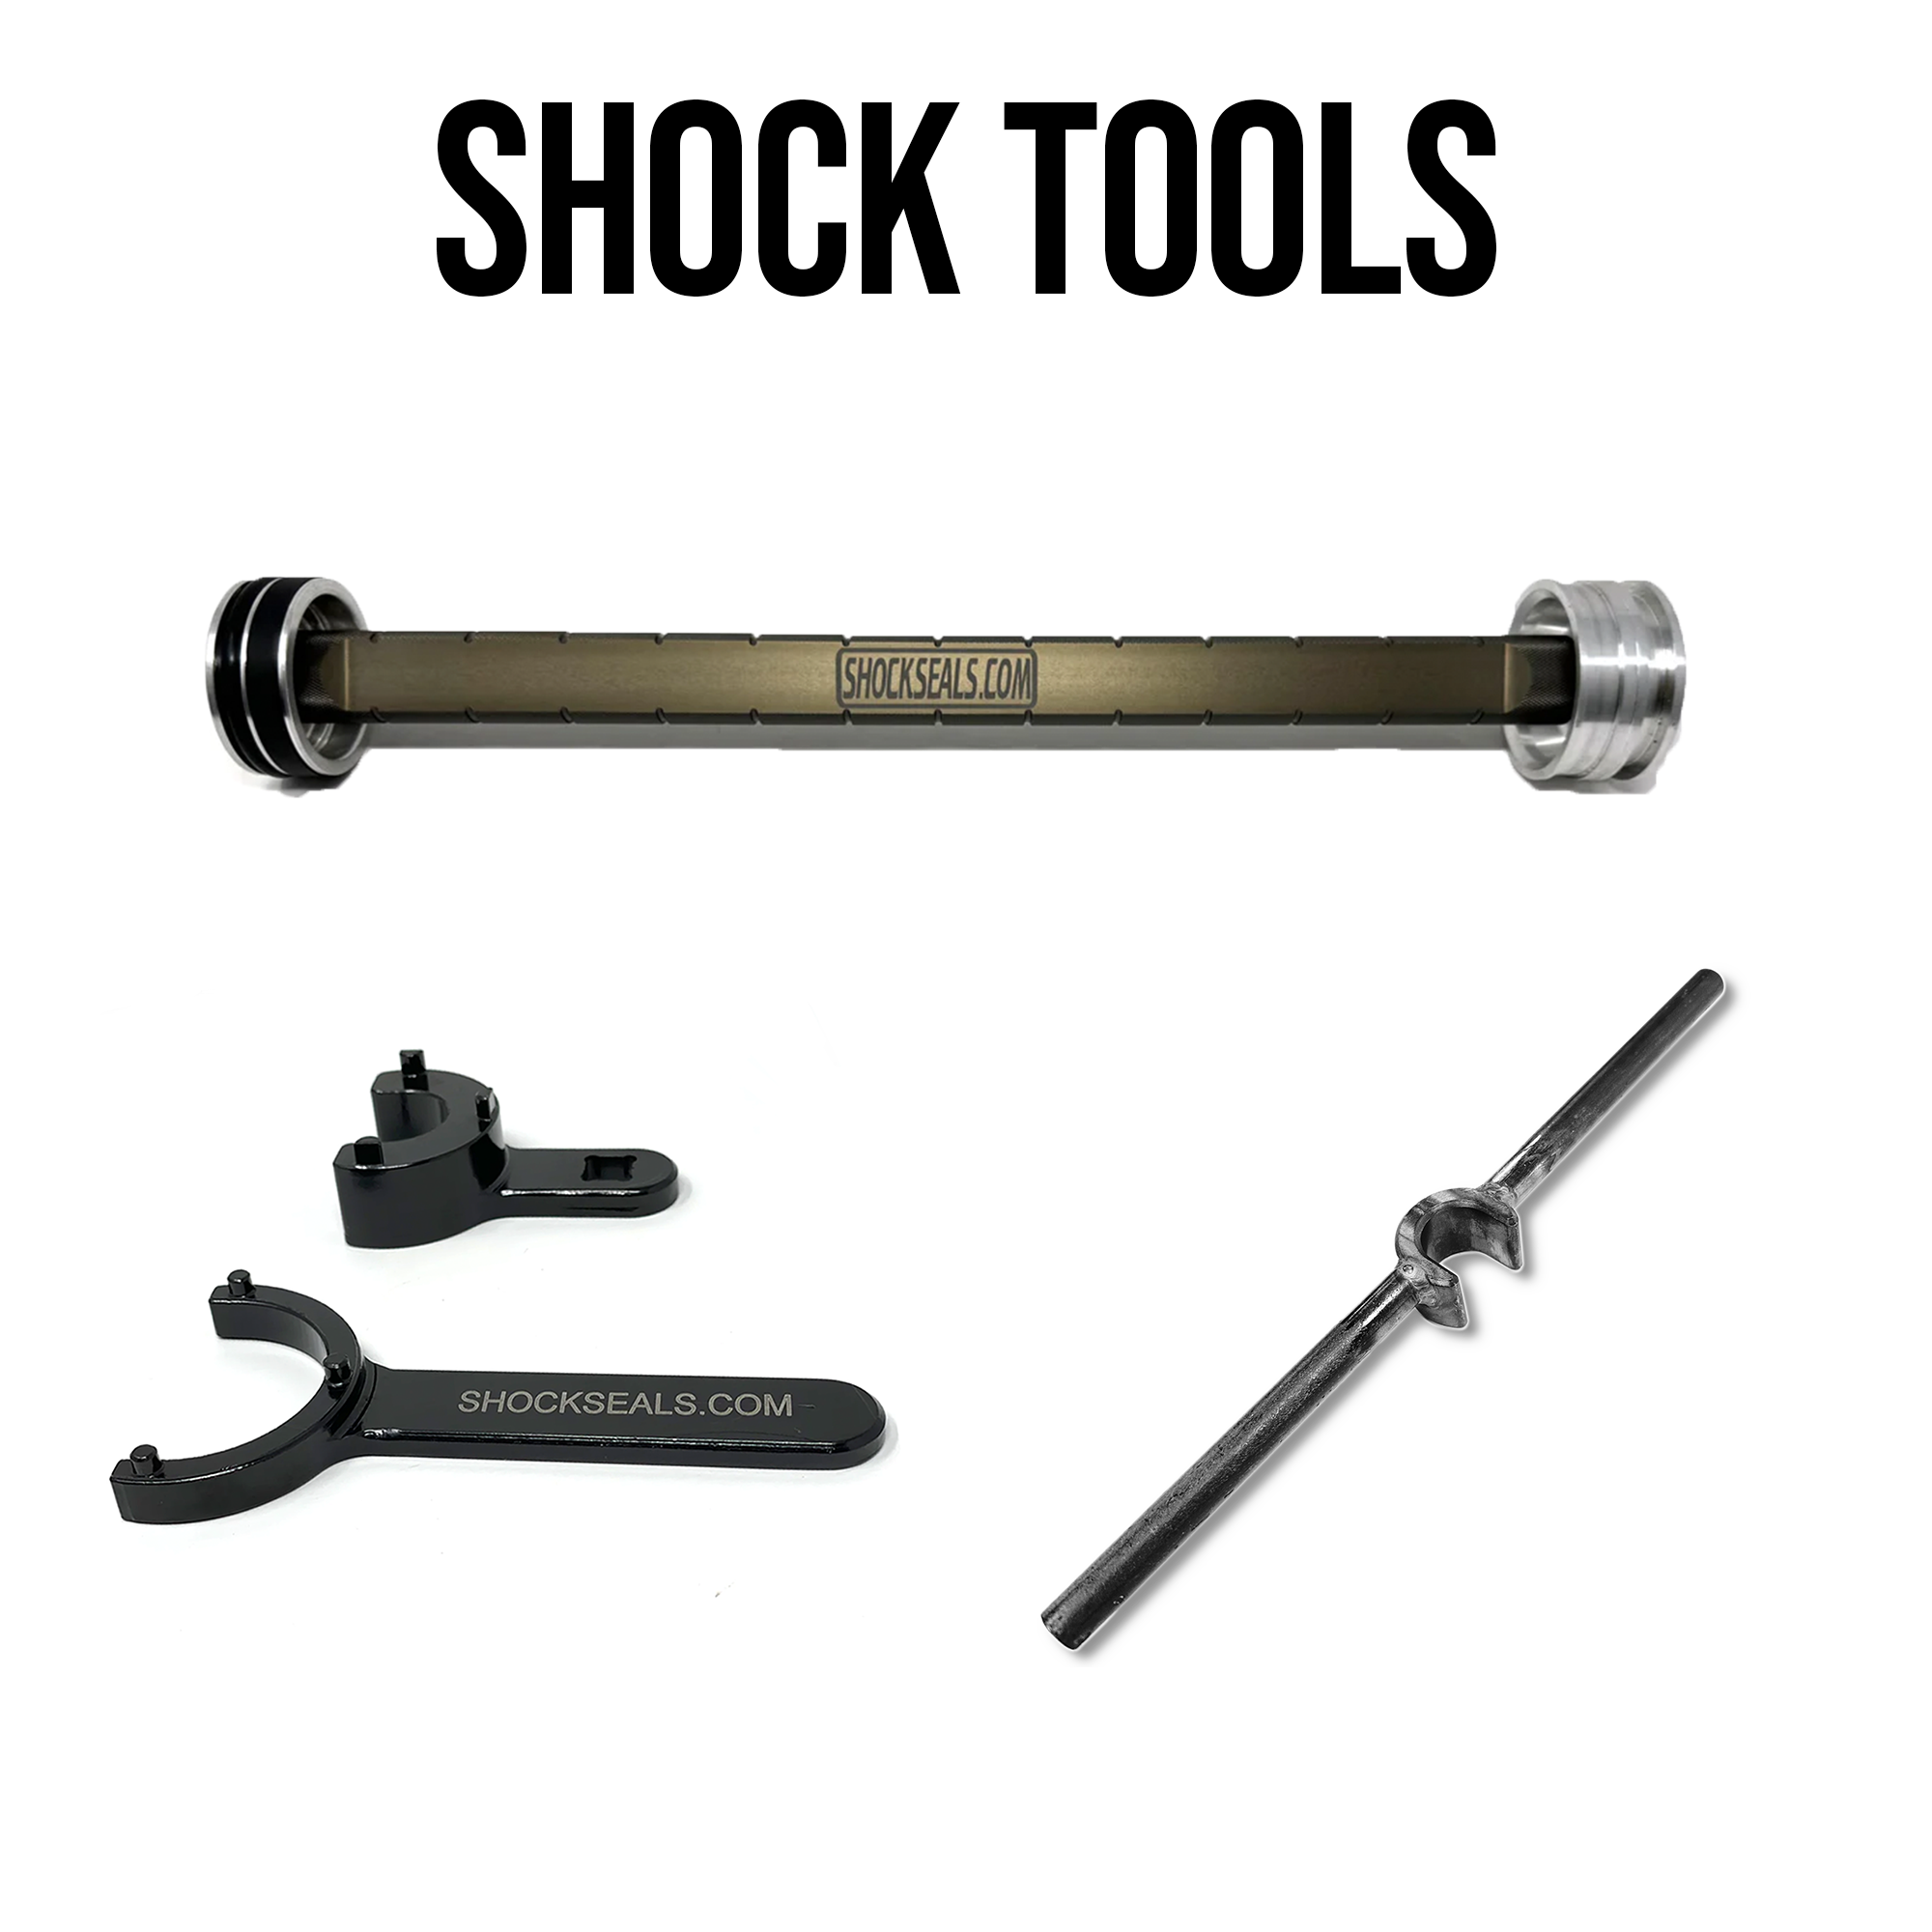 Shock Tools